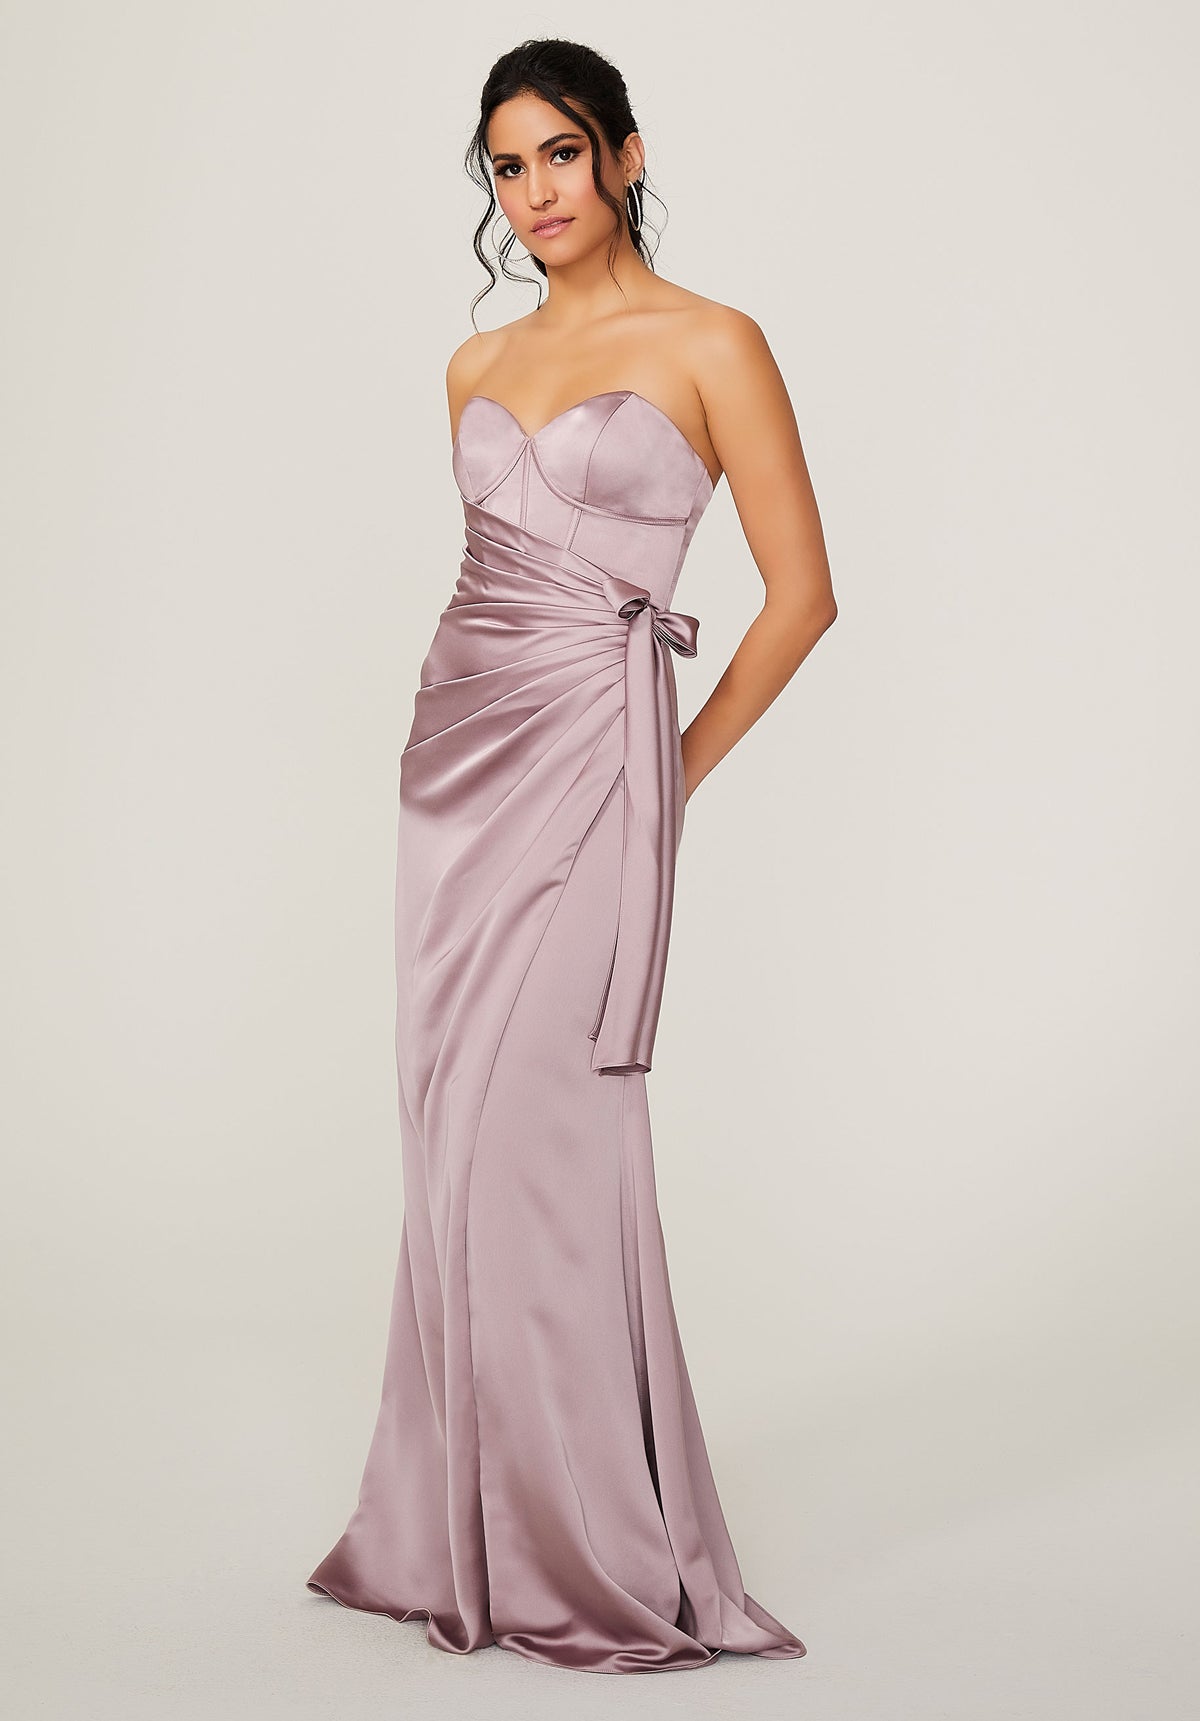 Morilee - 21791 - Cheron's Bridal, Bridesmaids Dress